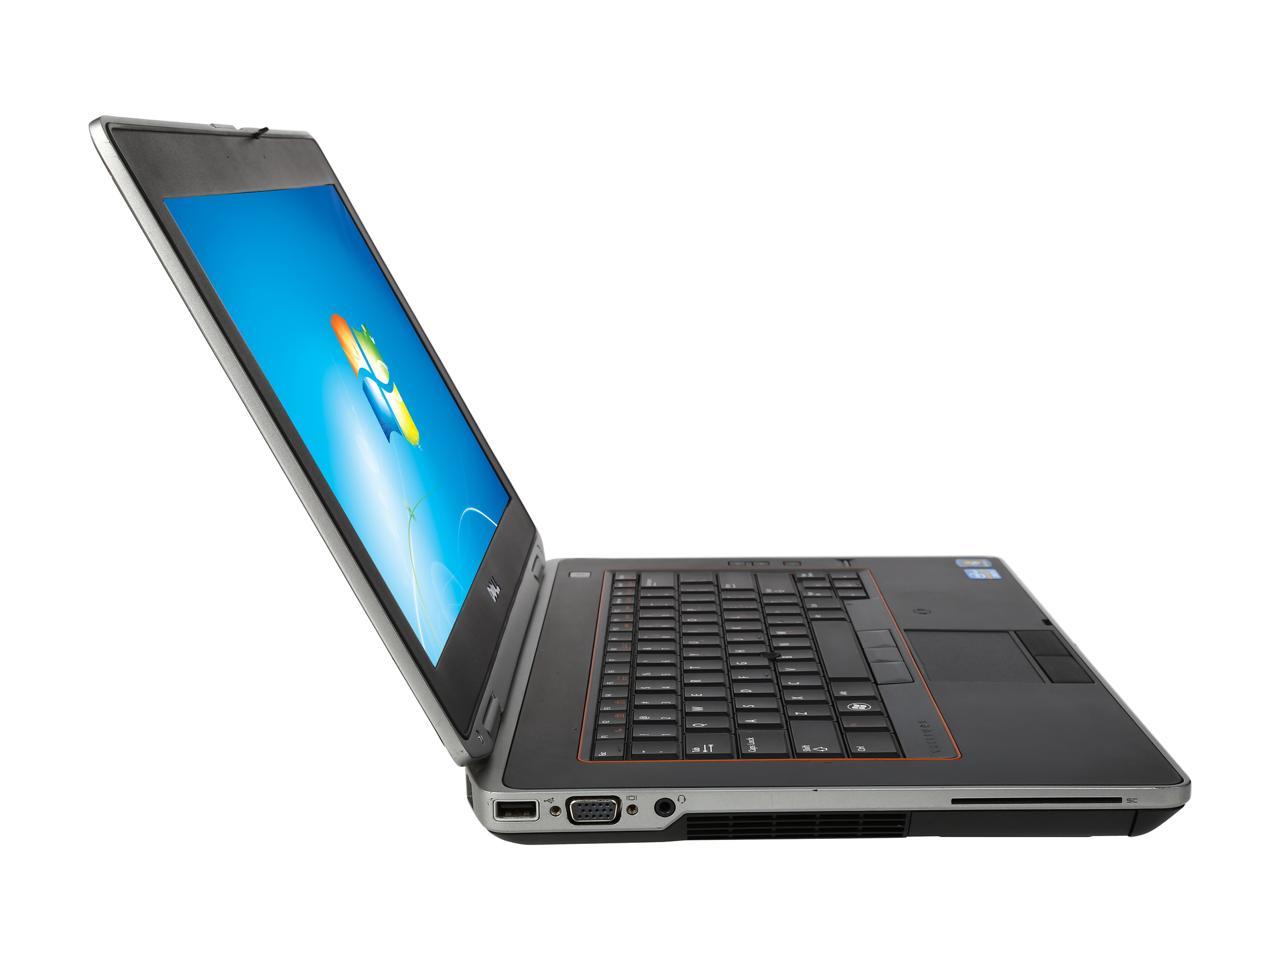 DELL Laptop Latitude E6420 Intel Core i5 2nd Gen 2520M (2.50 GHz) 4 GB Memory 320 GB HDD 14.0" Windows 7 Professional 64-Bit